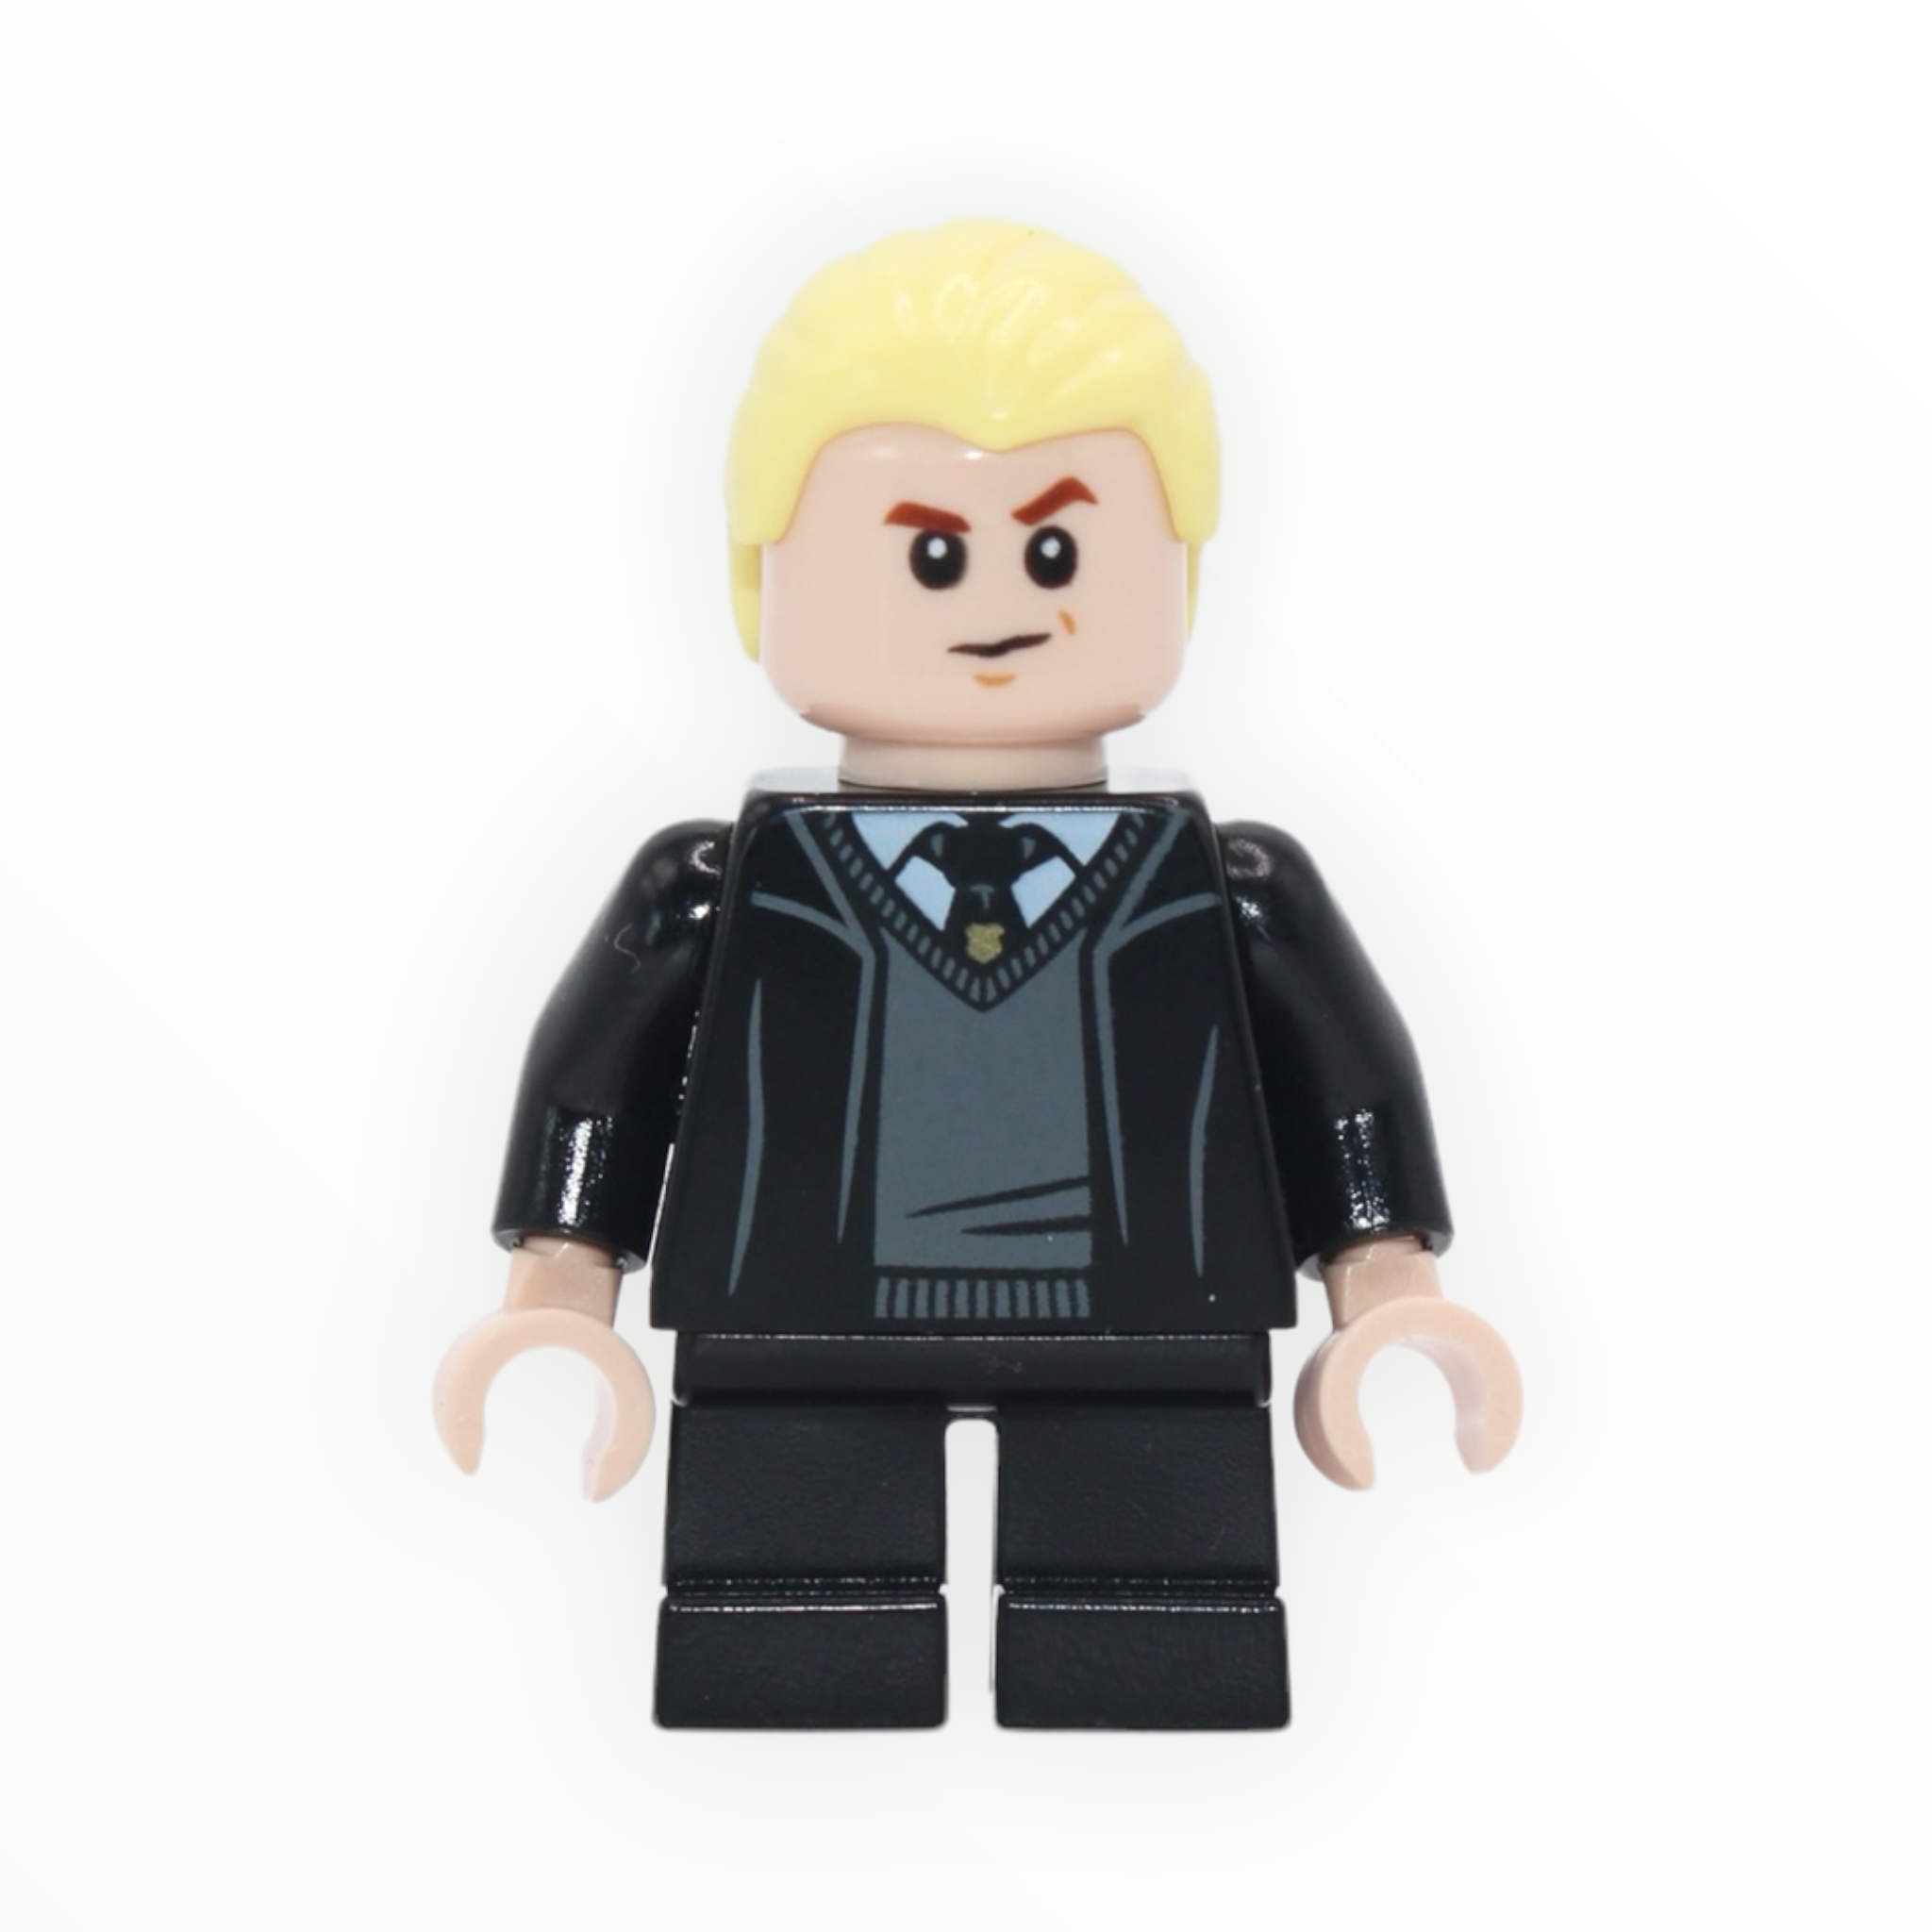 Draco Malfoy (Hogwarts robe, black tie with crest, short legs)